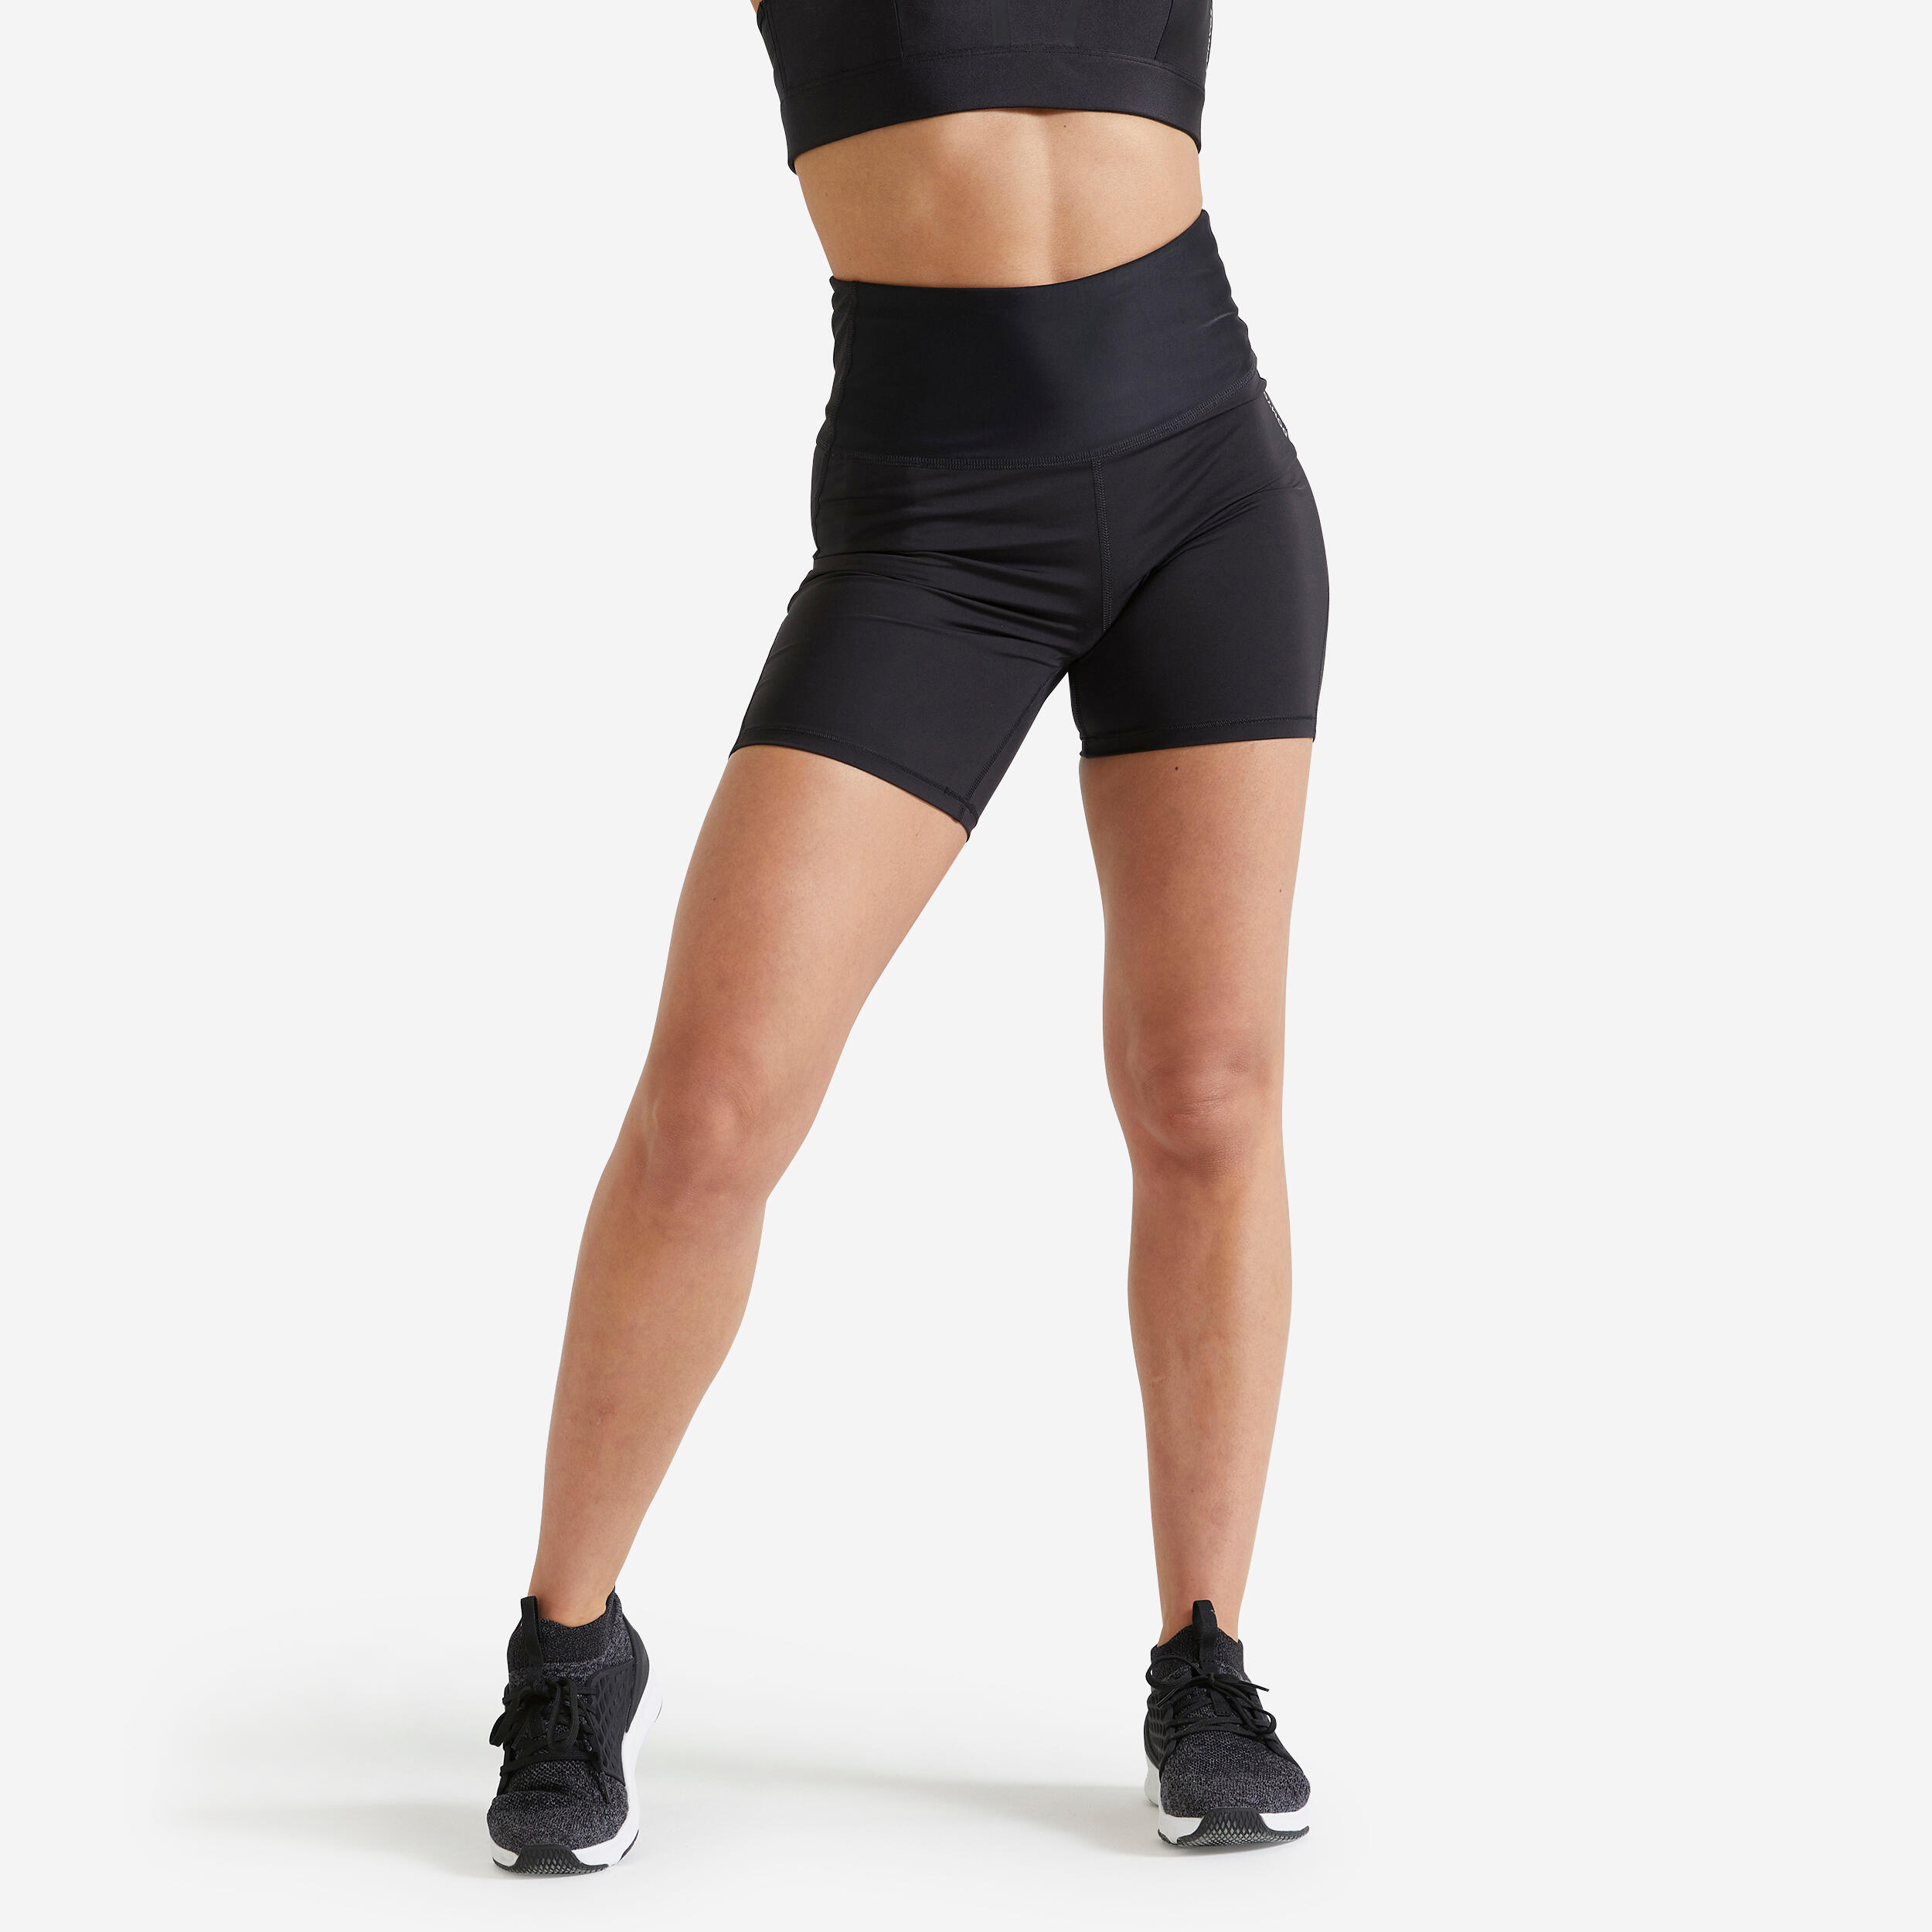 500 Women's Fitness Cardio Training Shorts - Black